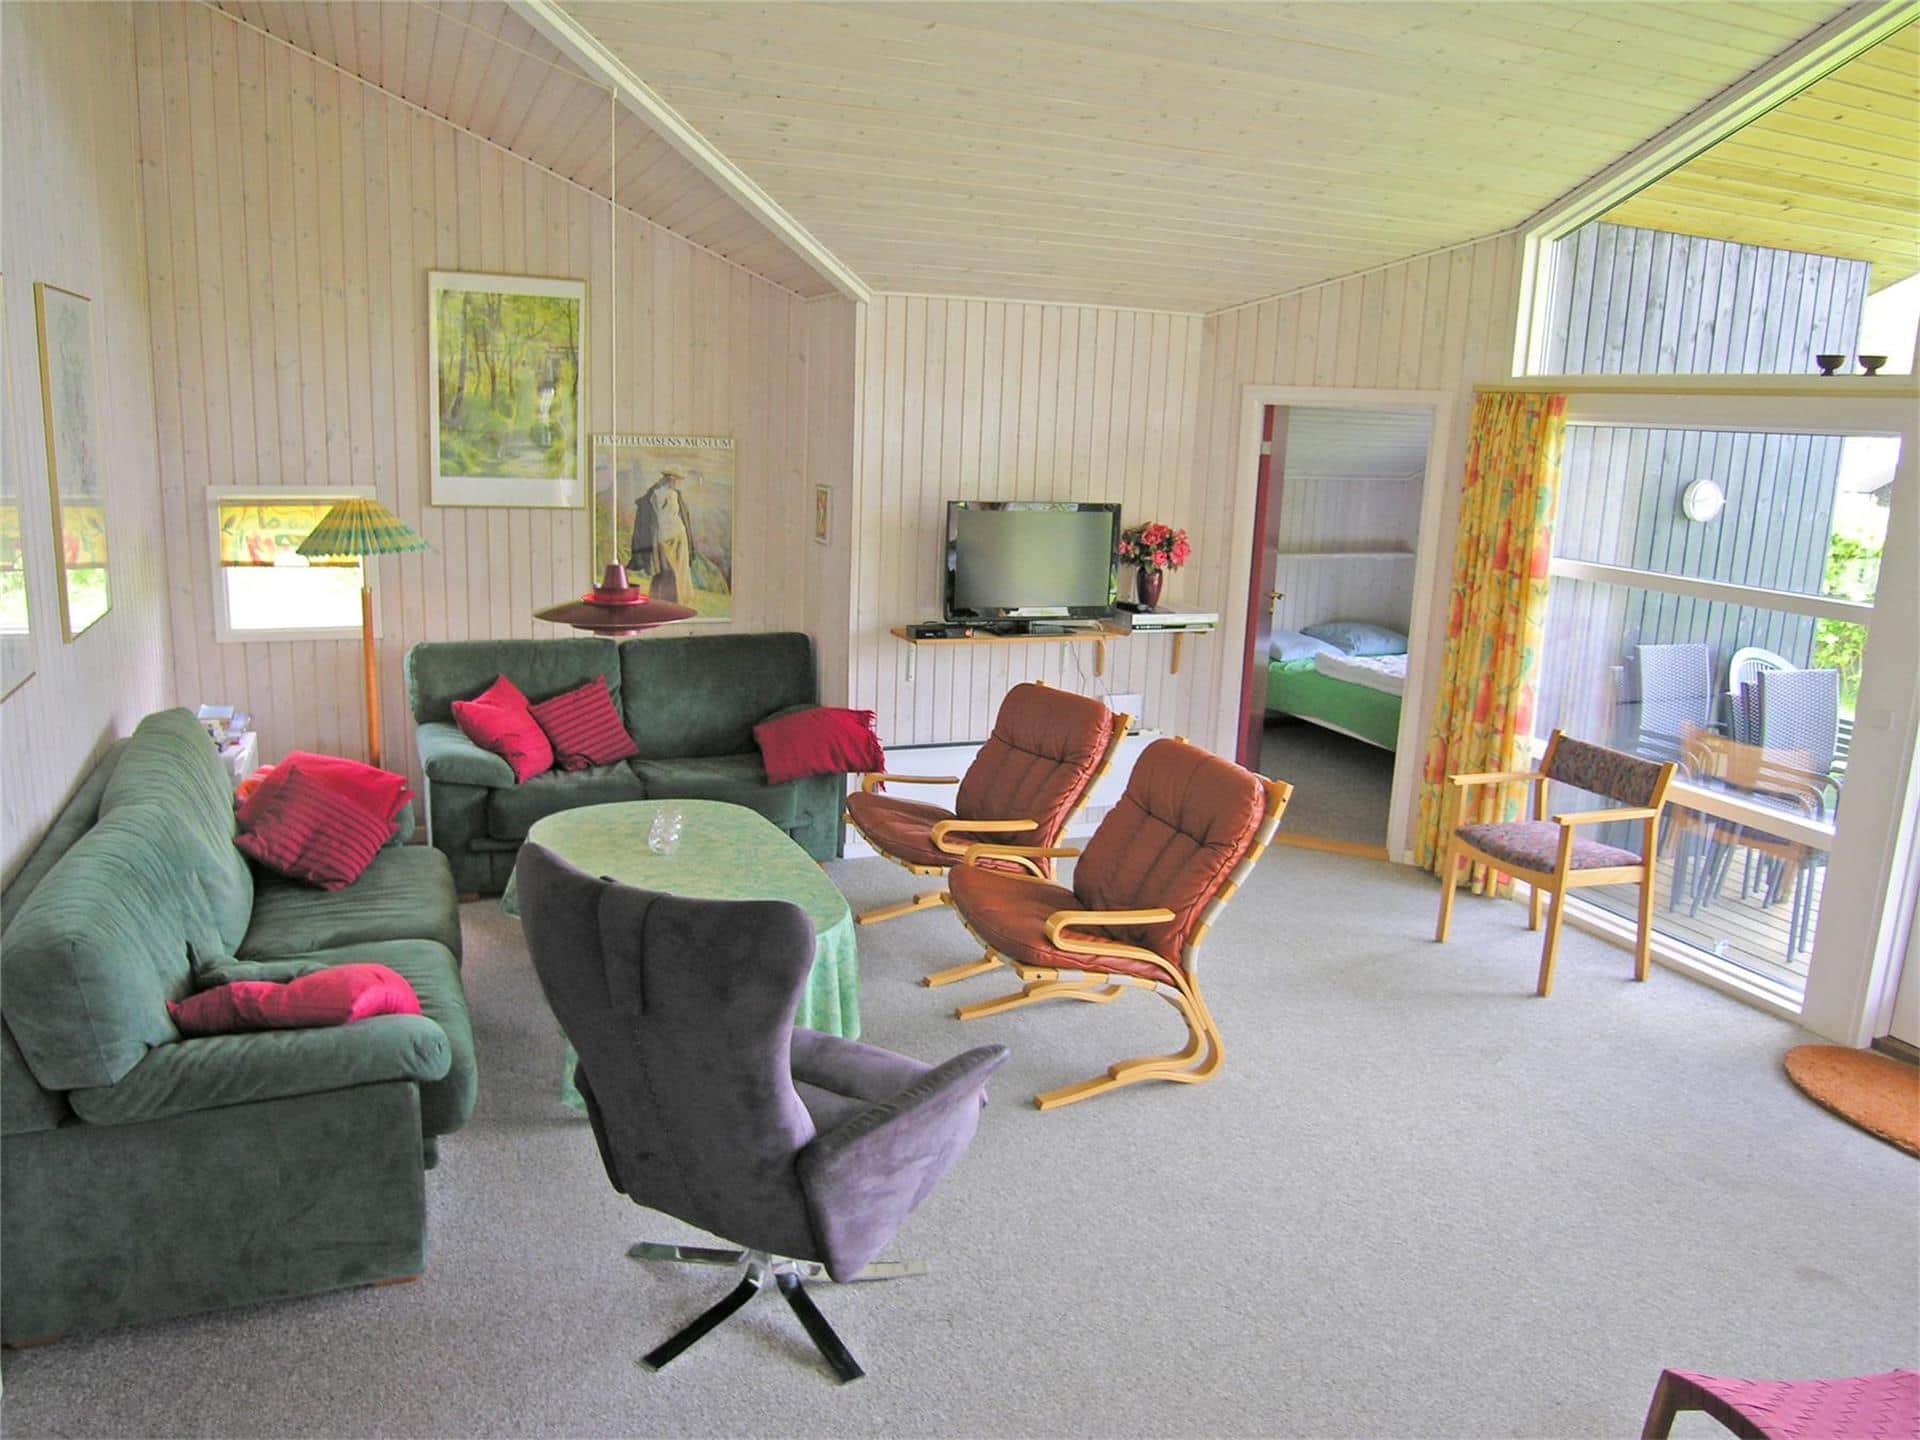 Livingroom 1 Image 2-19 Holiday-home 40515, Pøt Strandby 400, DK - 7130 Juelsminde